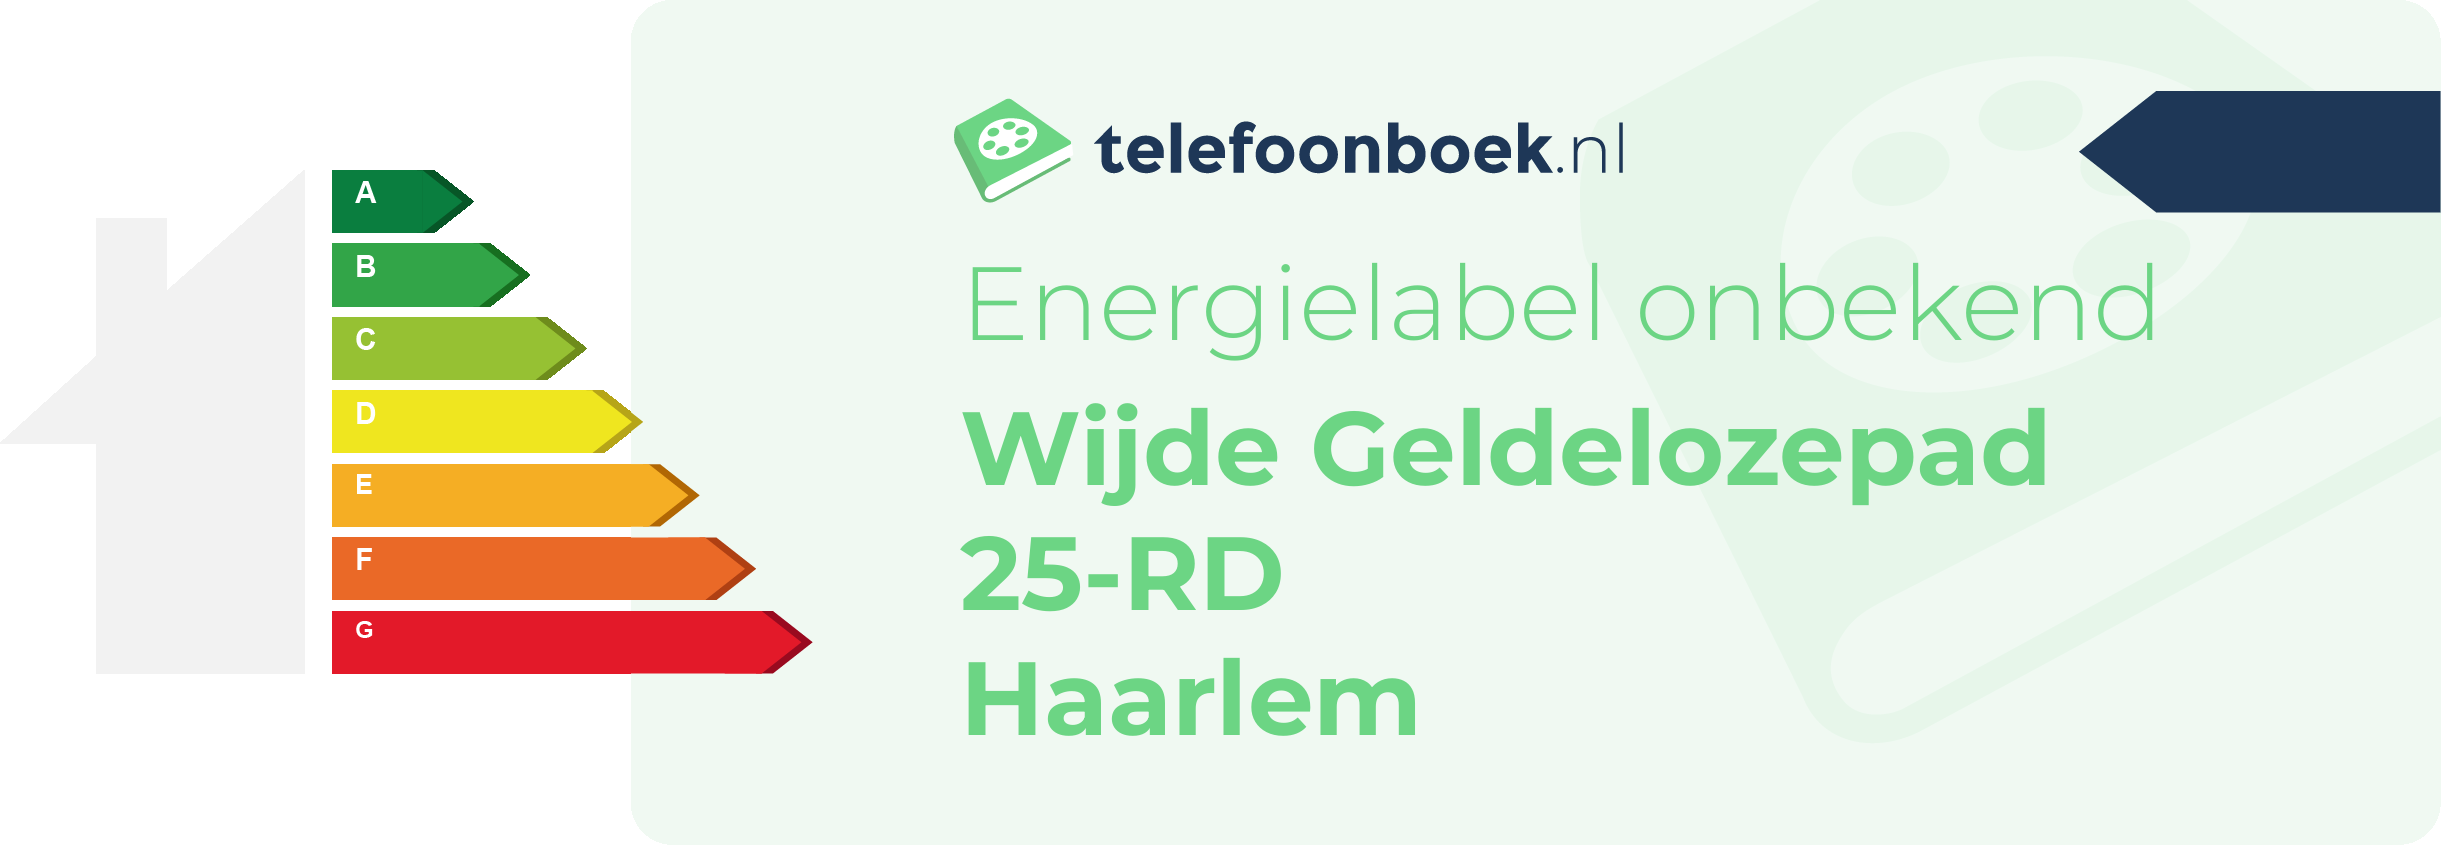 Energielabel Wijde Geldelozepad 25-RD Haarlem